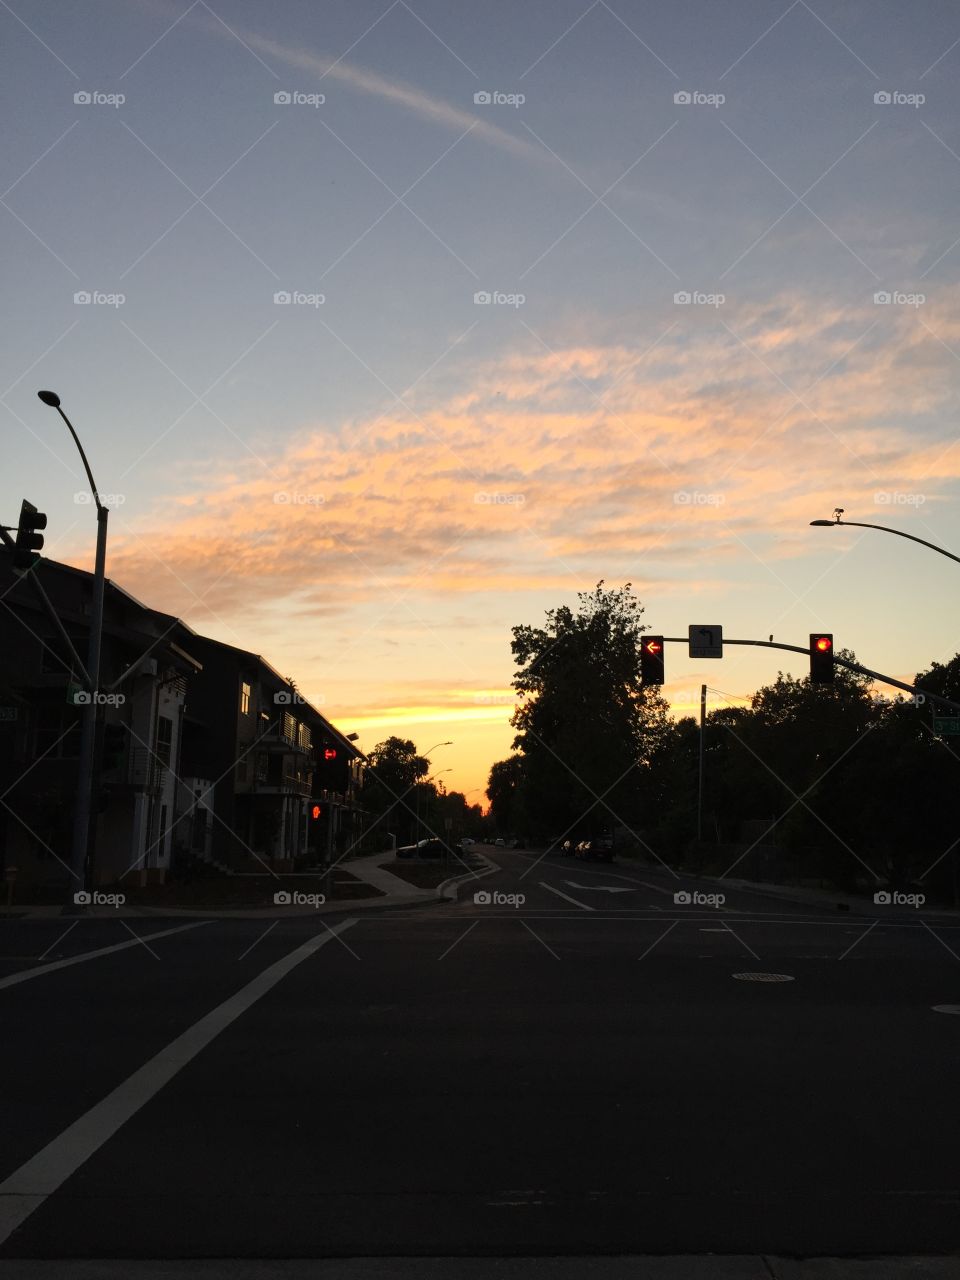 Street, Road, Sunset, Light, Landscape